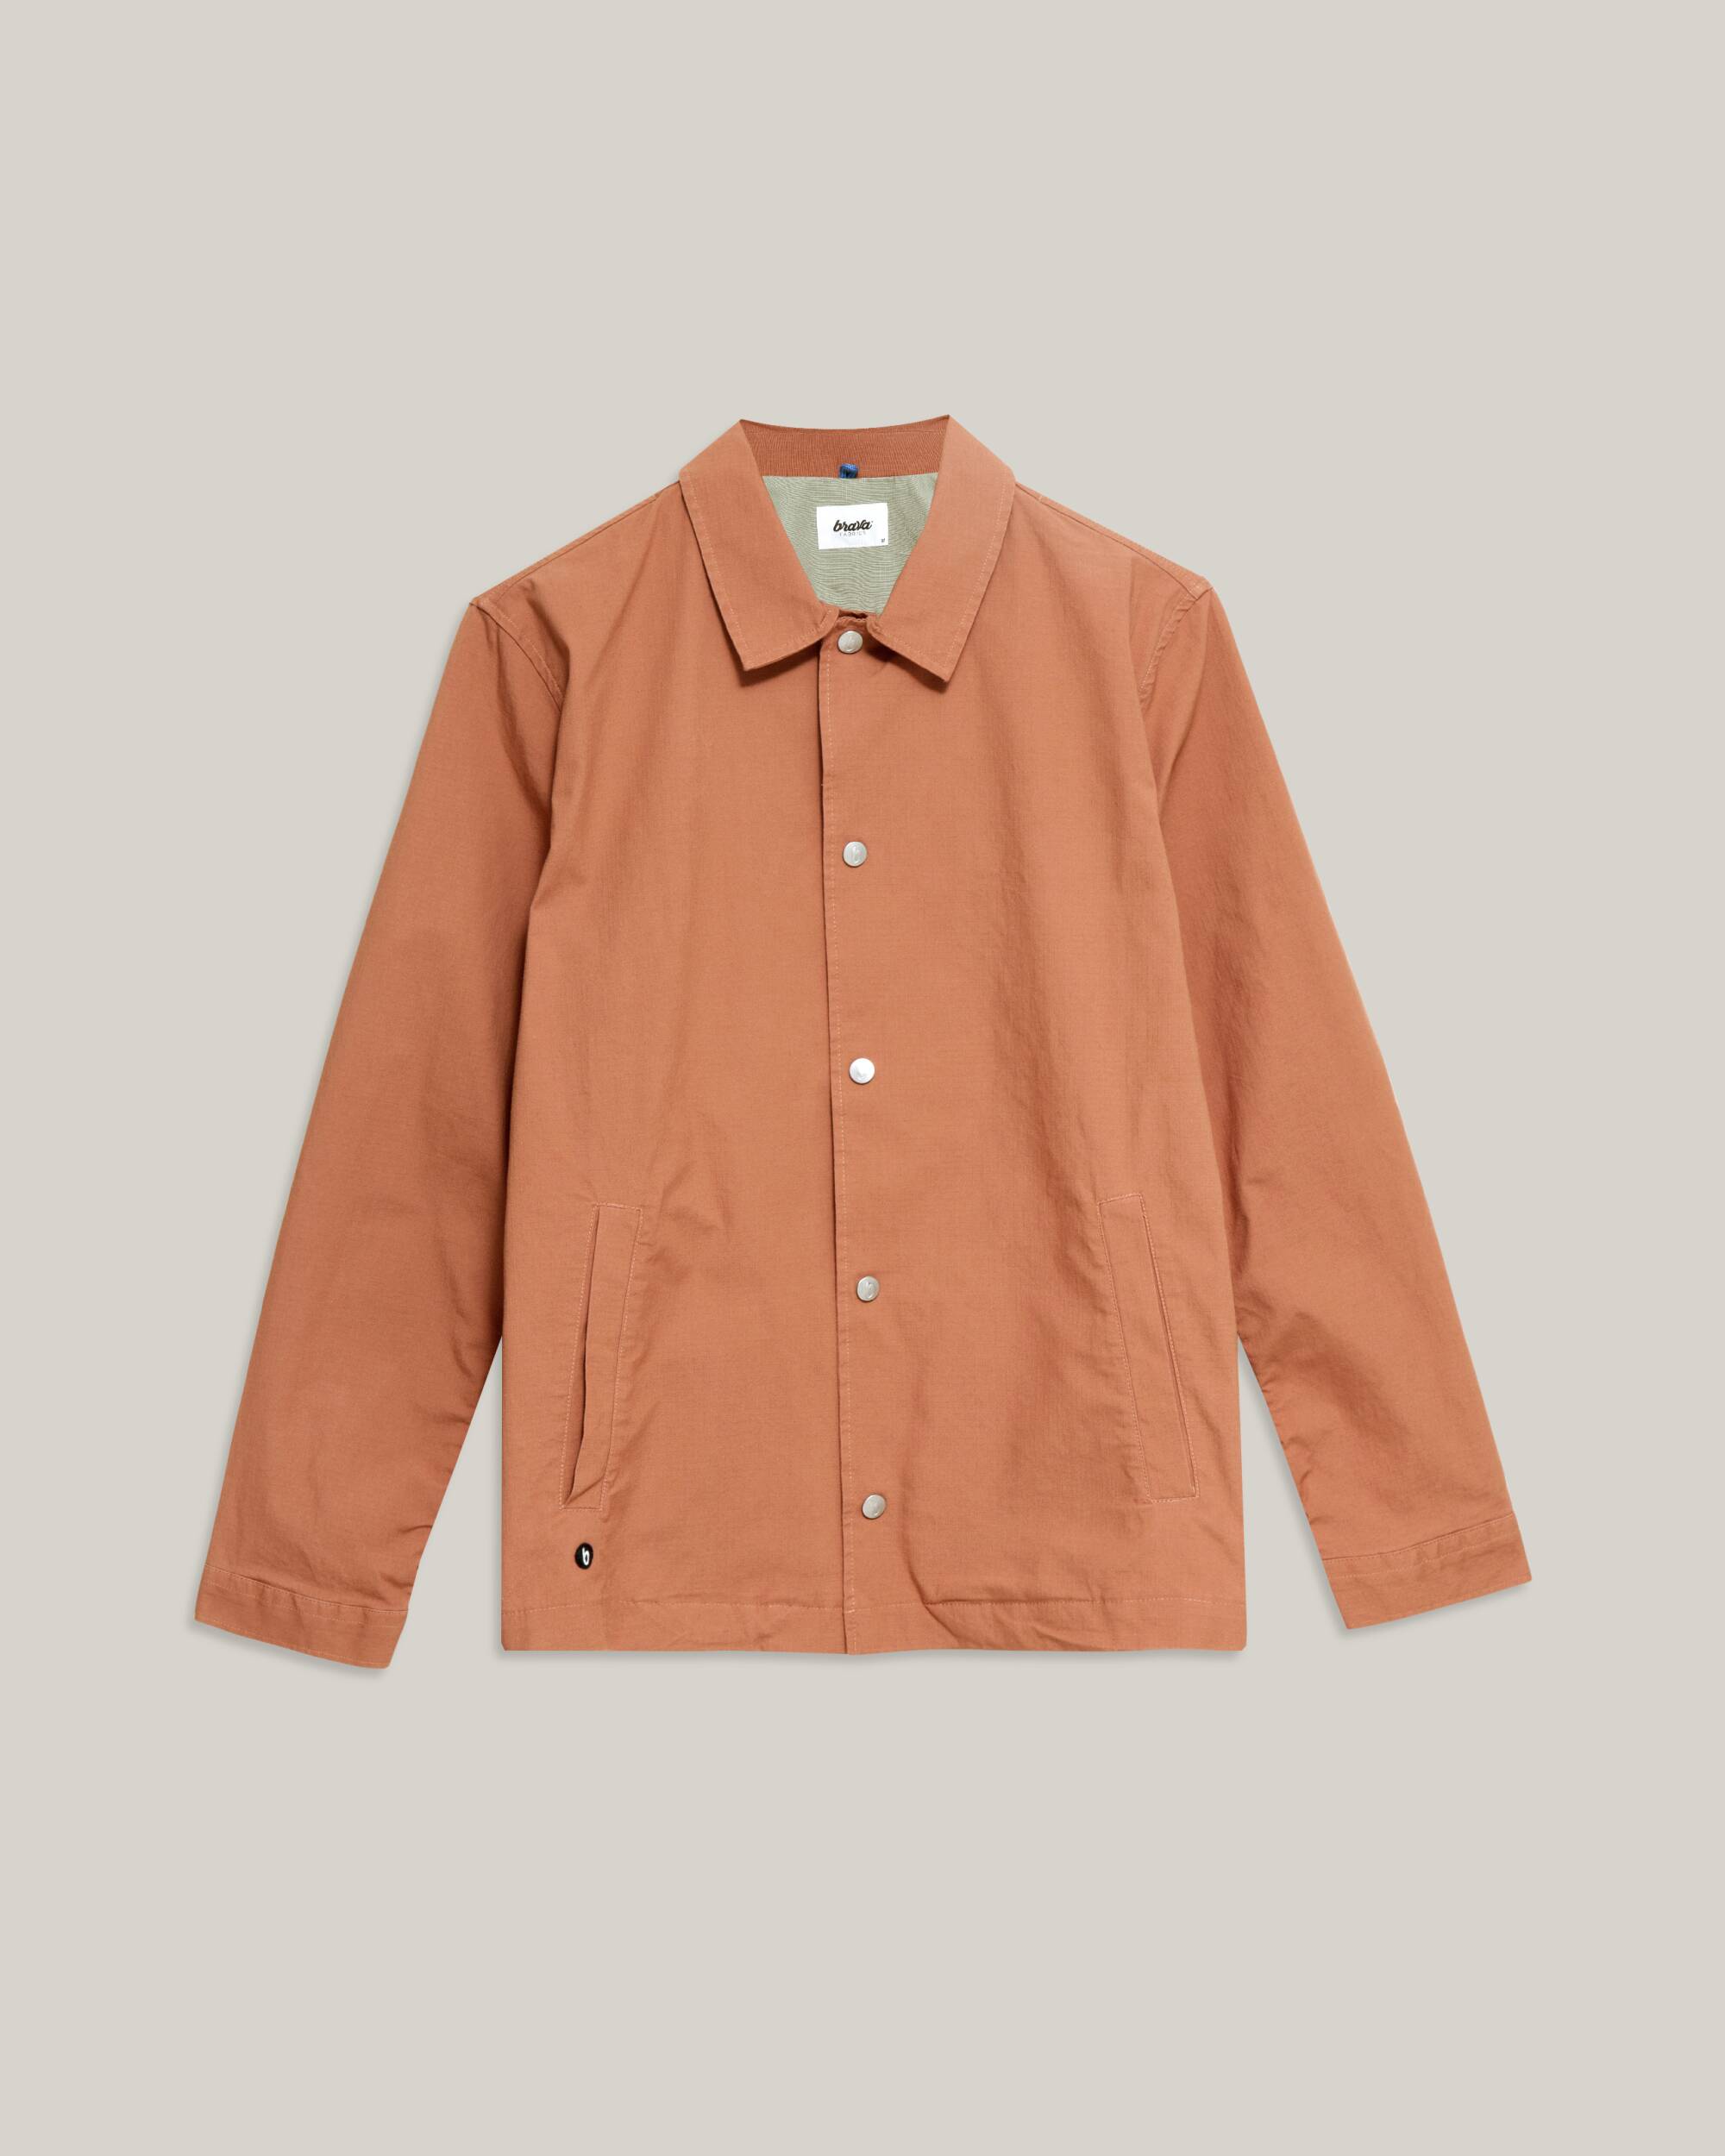 Orange organic cotton ripstop jacket from Brava Fabrics